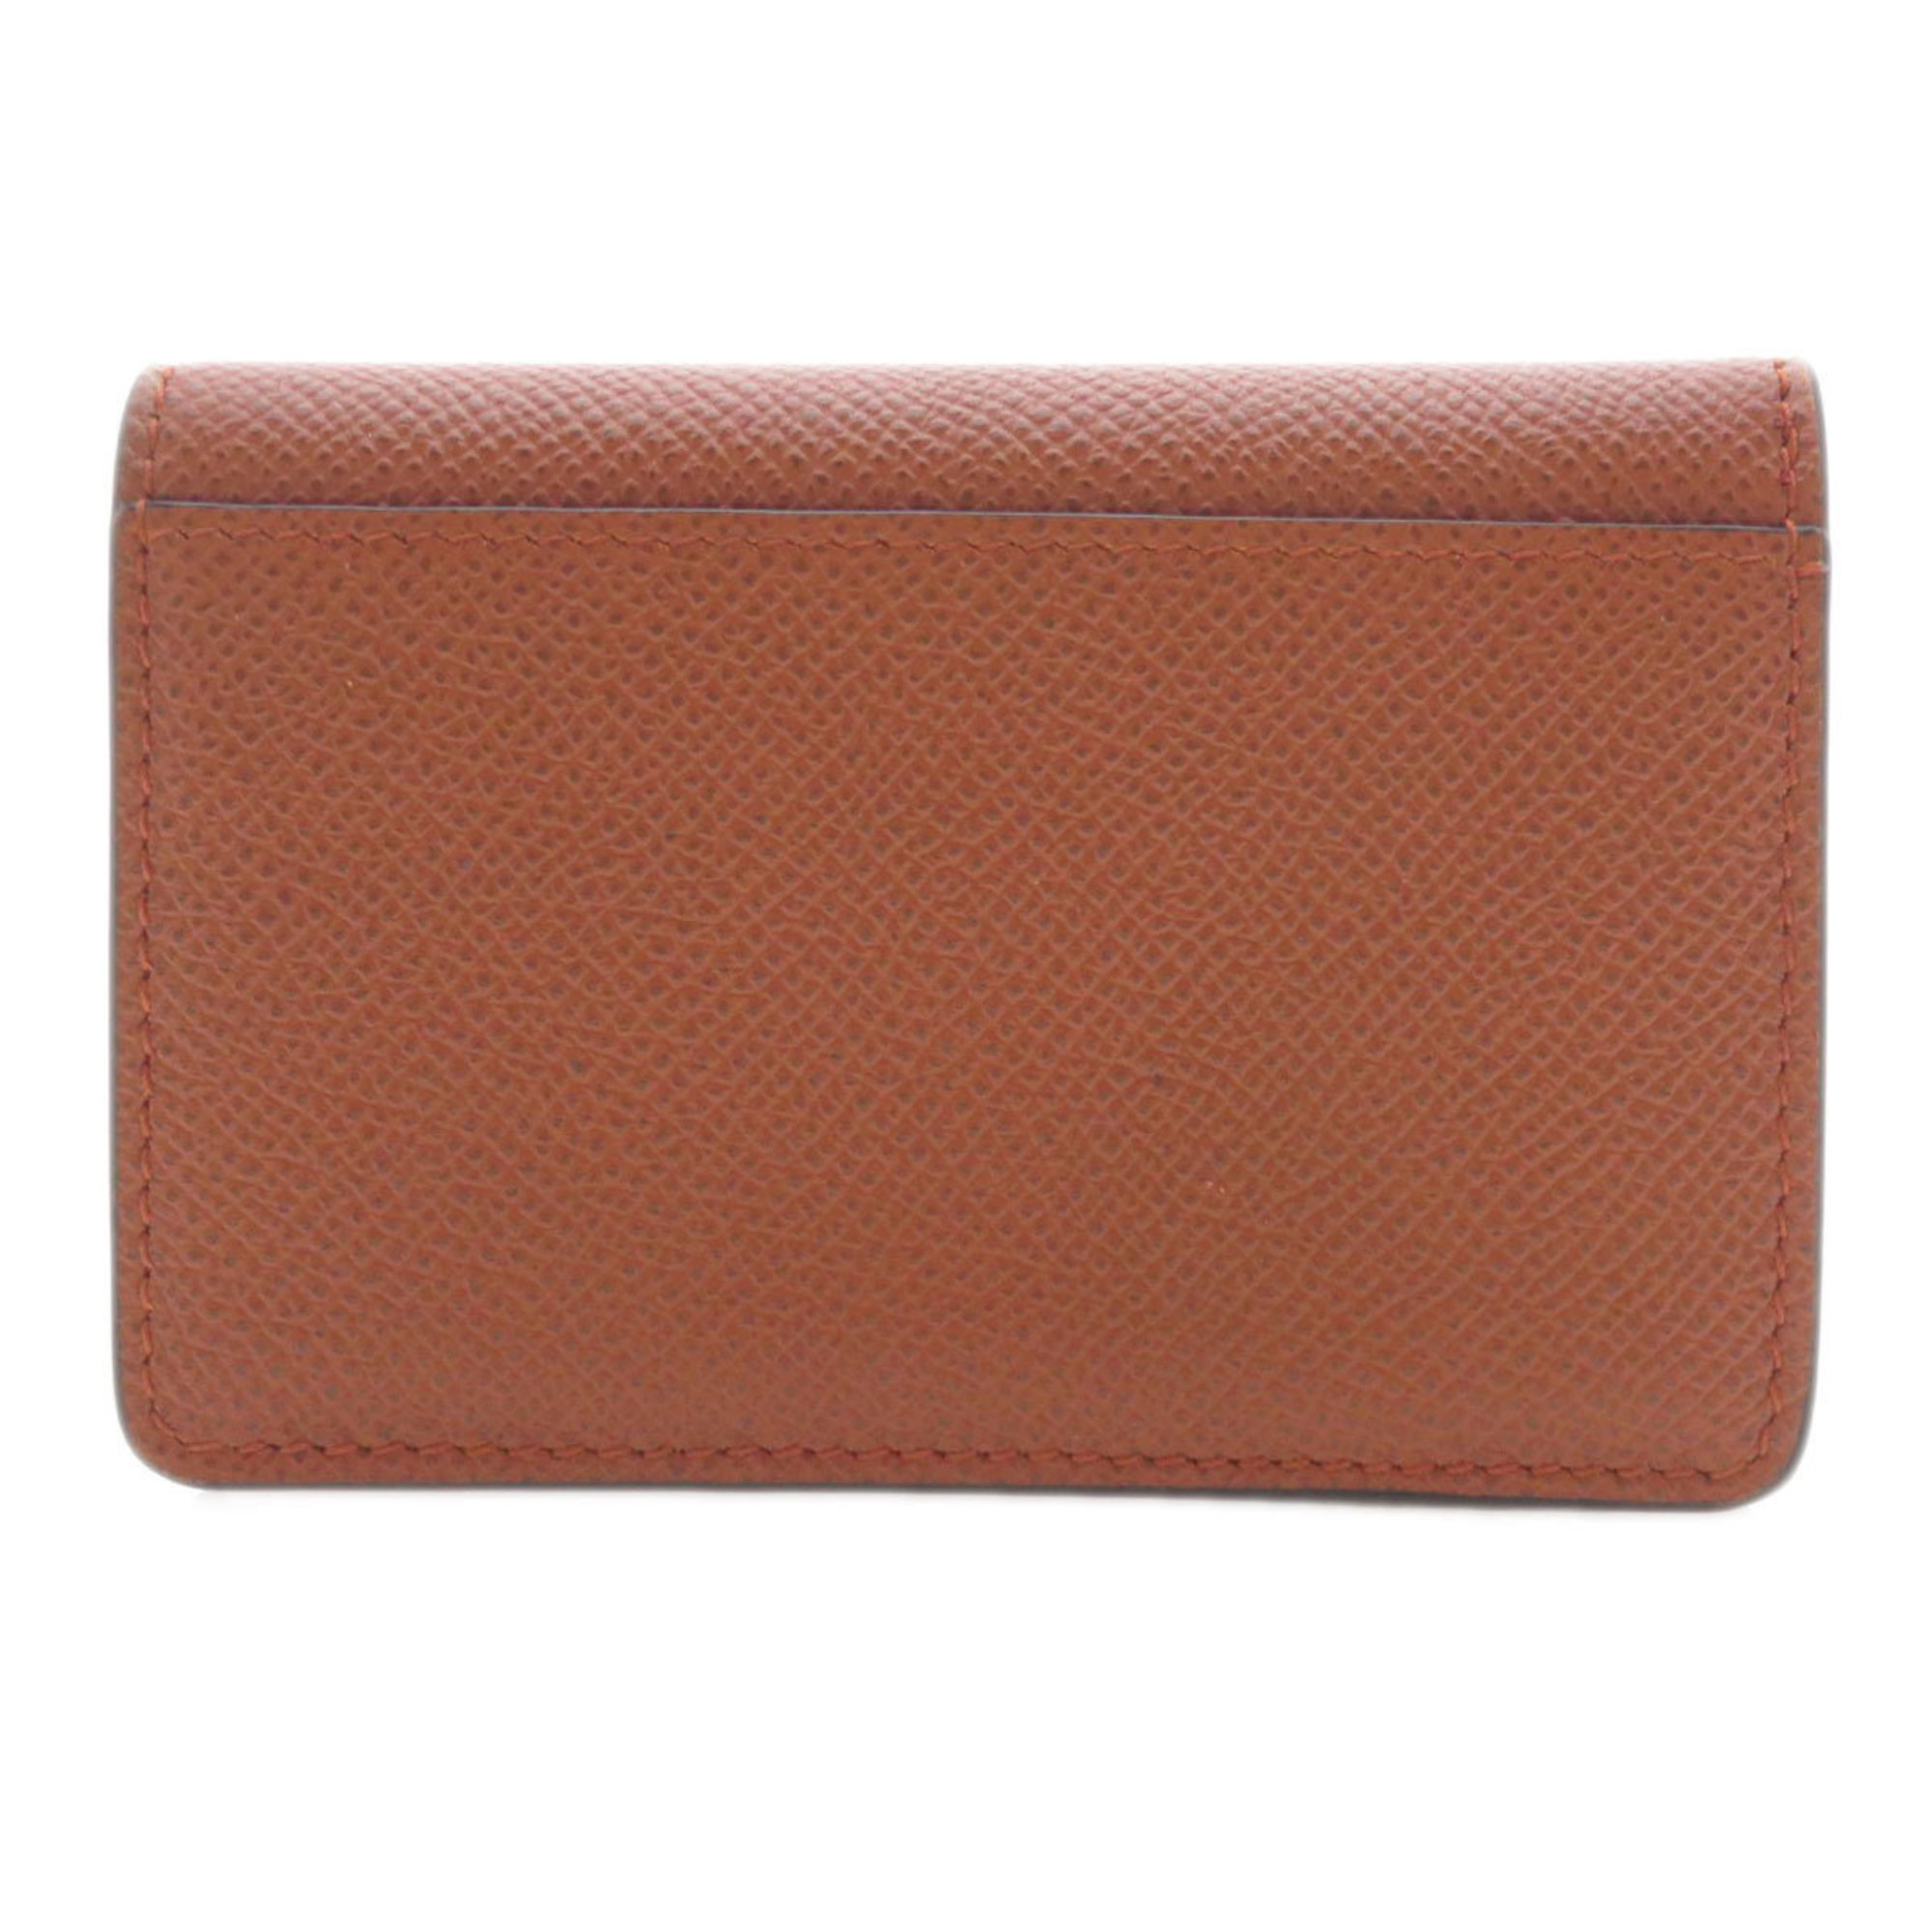 Salvatore Ferragamo Gancini Business Card Holder/Card Case in Calf Leather for Women